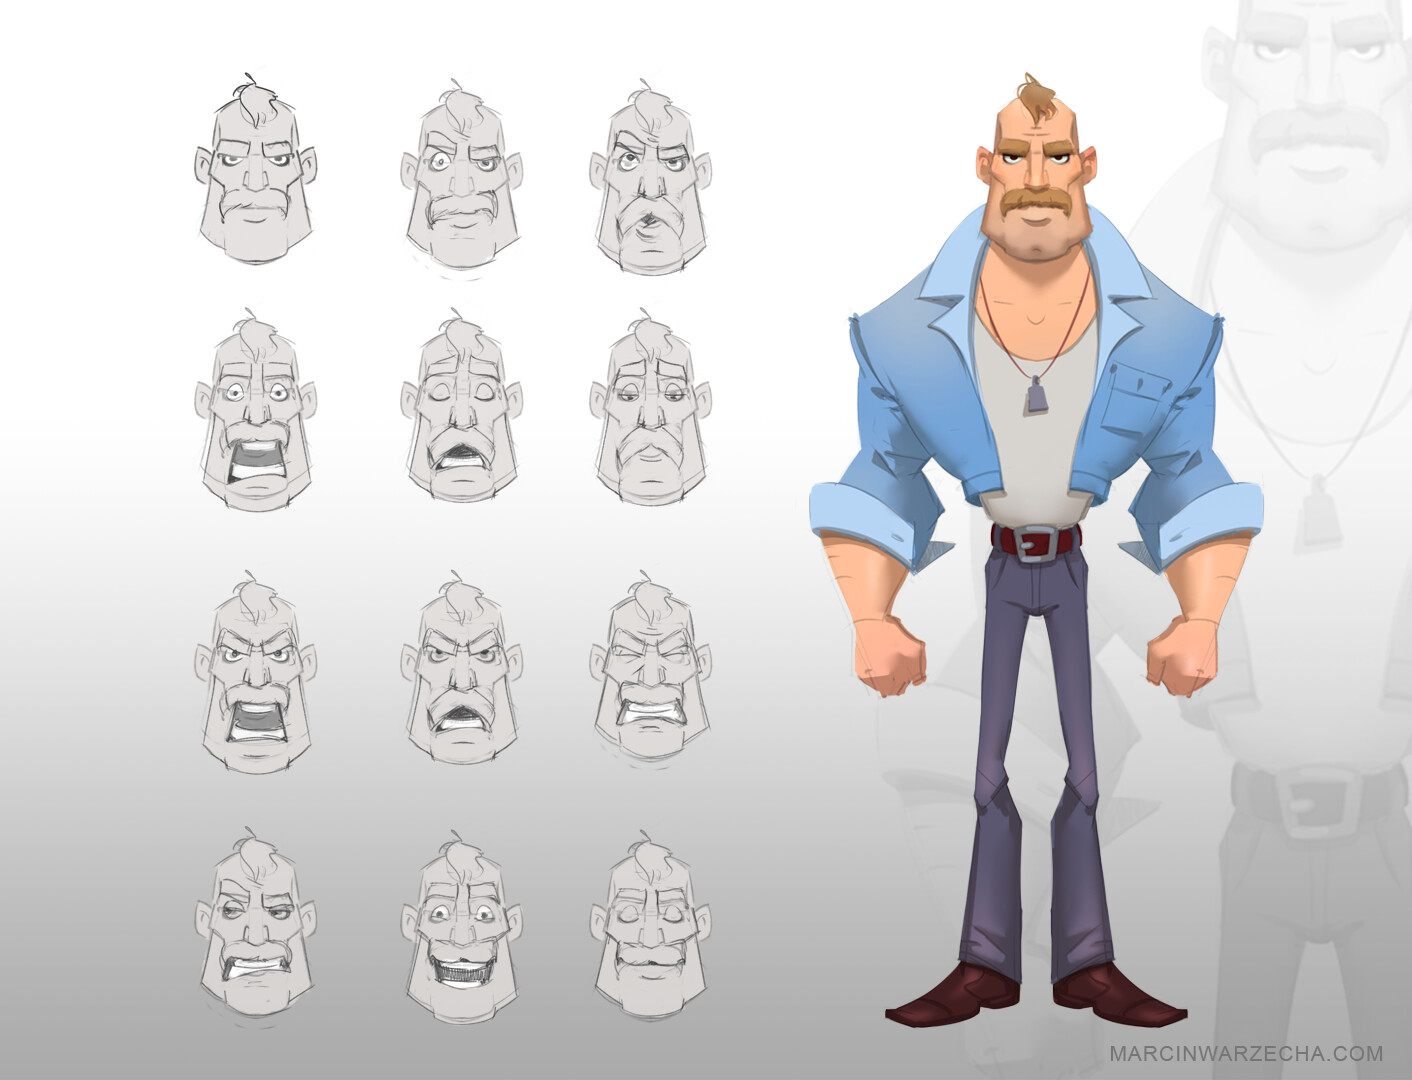 Hank - Stylized character design